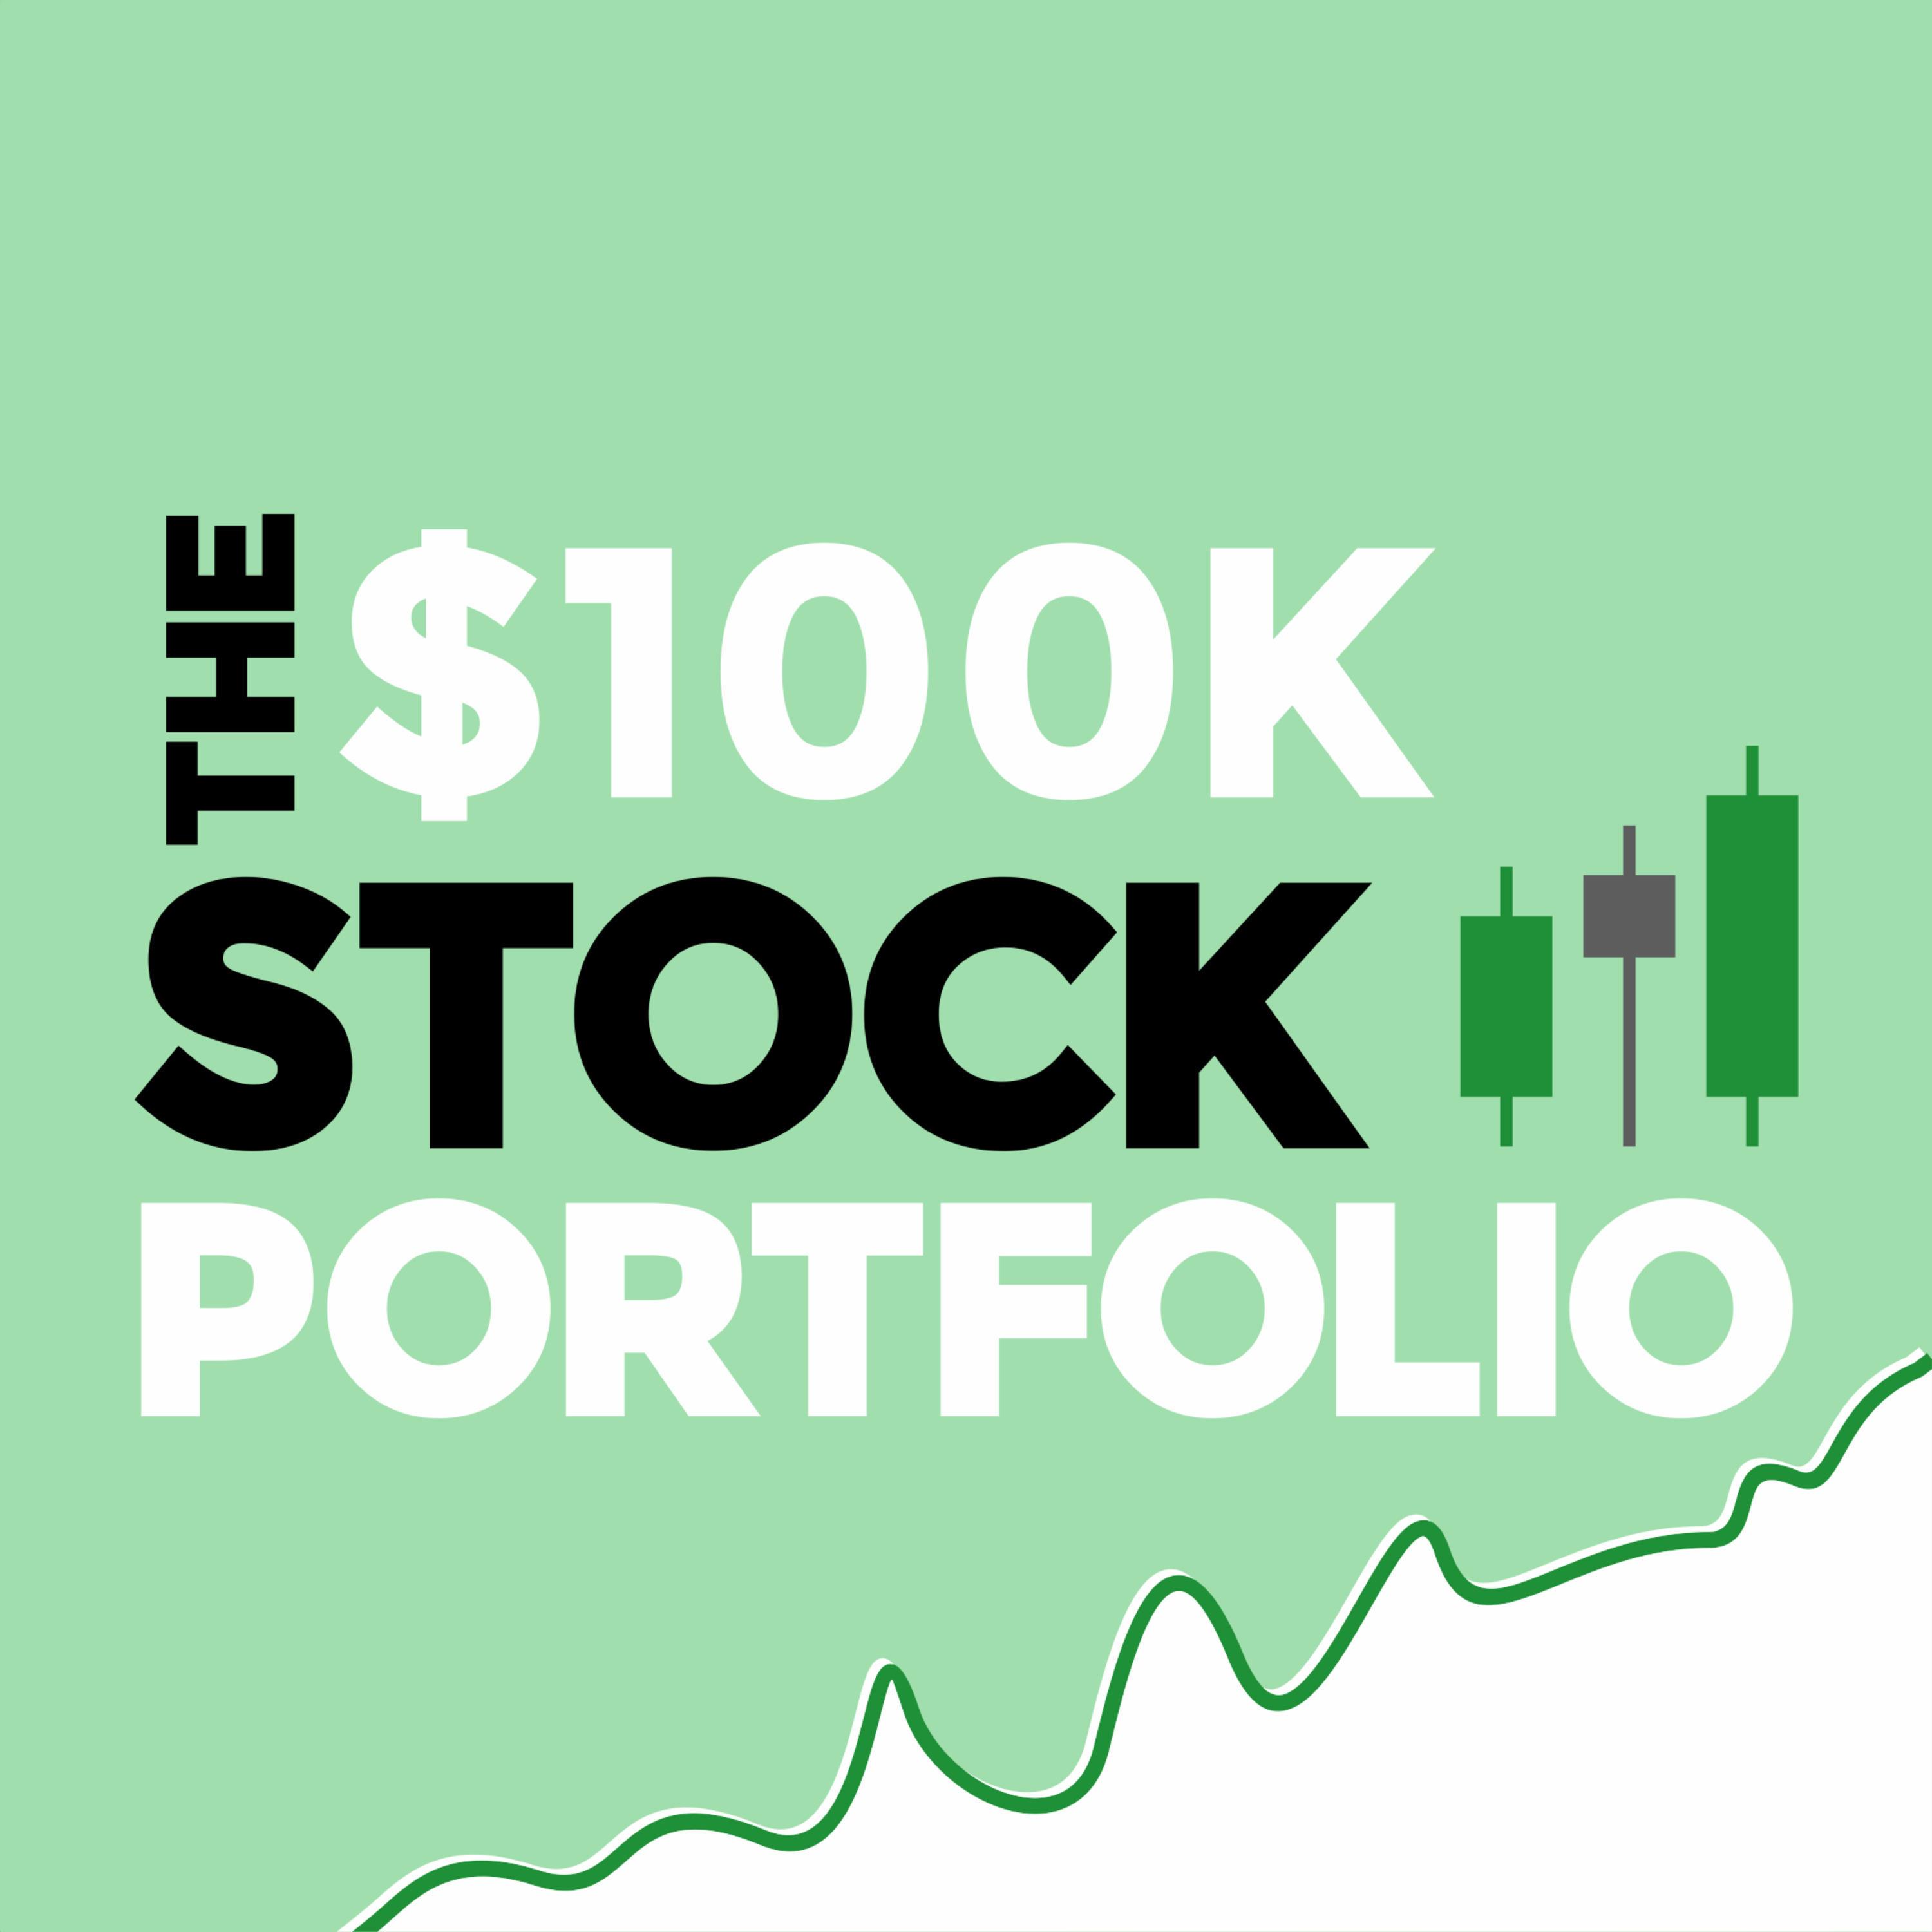 The $100k Stock Portfolio